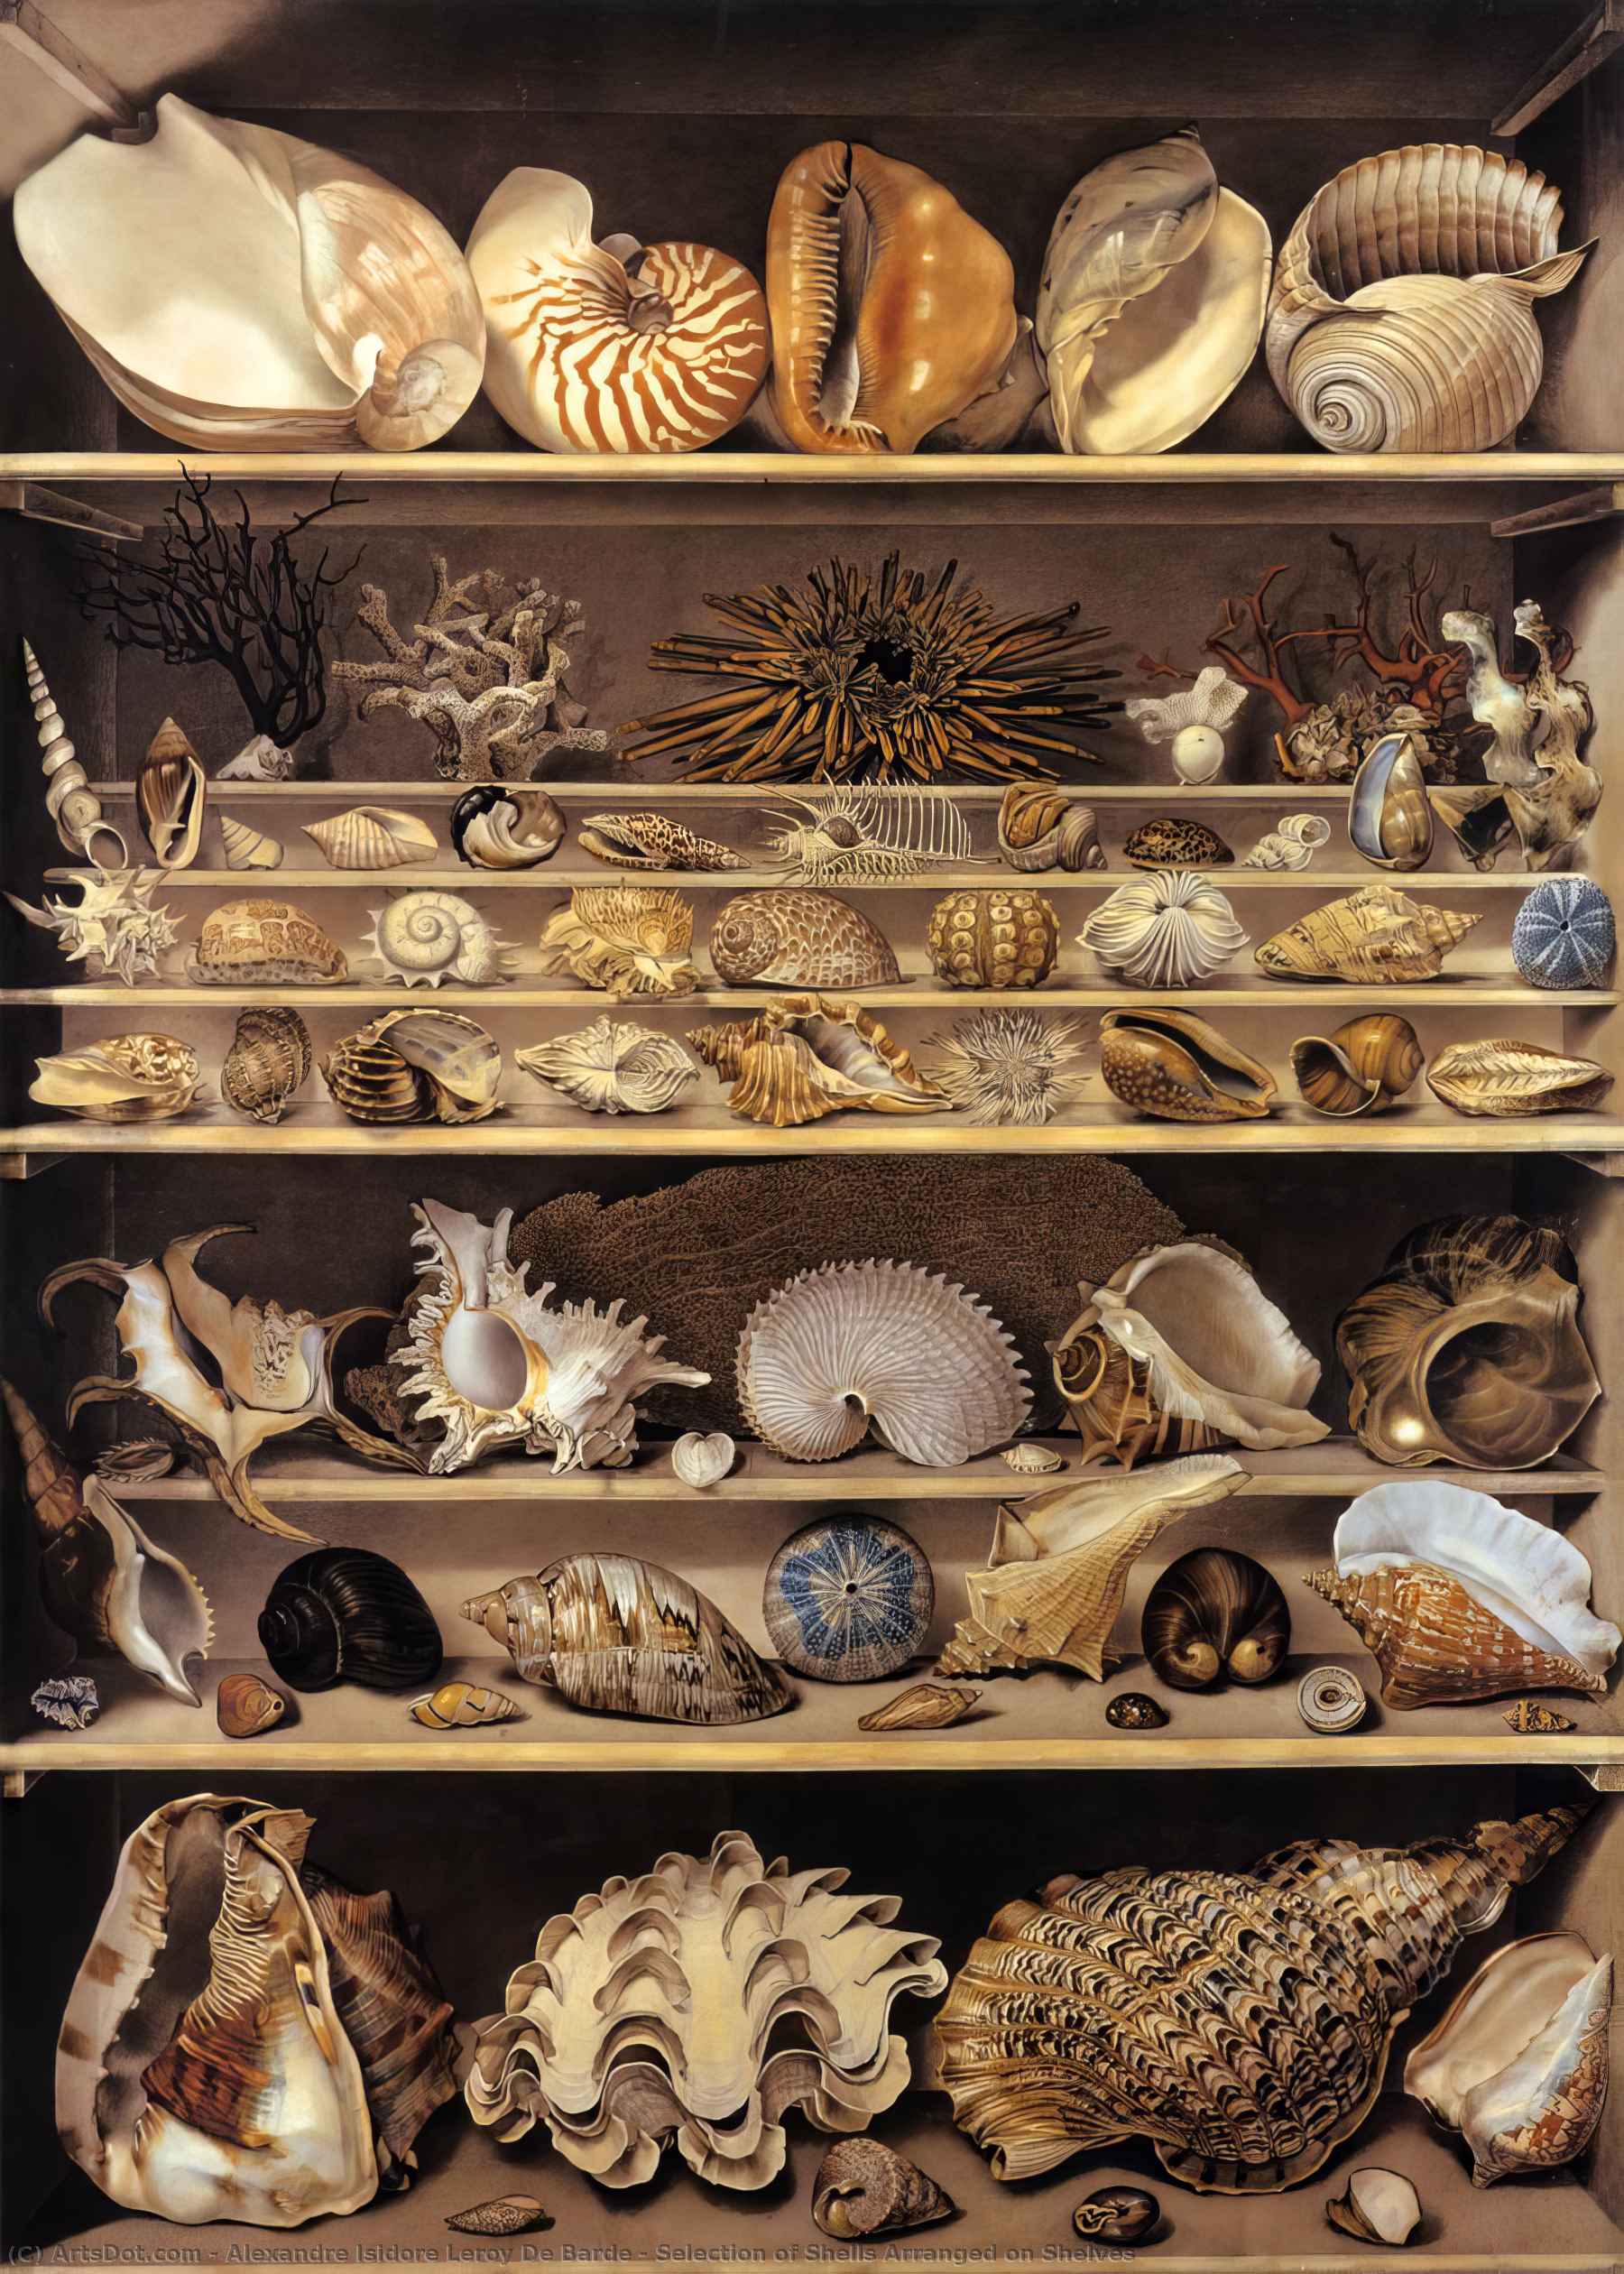 Buy Museum Art Reproductions Selection of Shells Arranged on Shelves by Alexandre Isidore Leroy De Barde (1777-1828, France) | ArtsDot.com